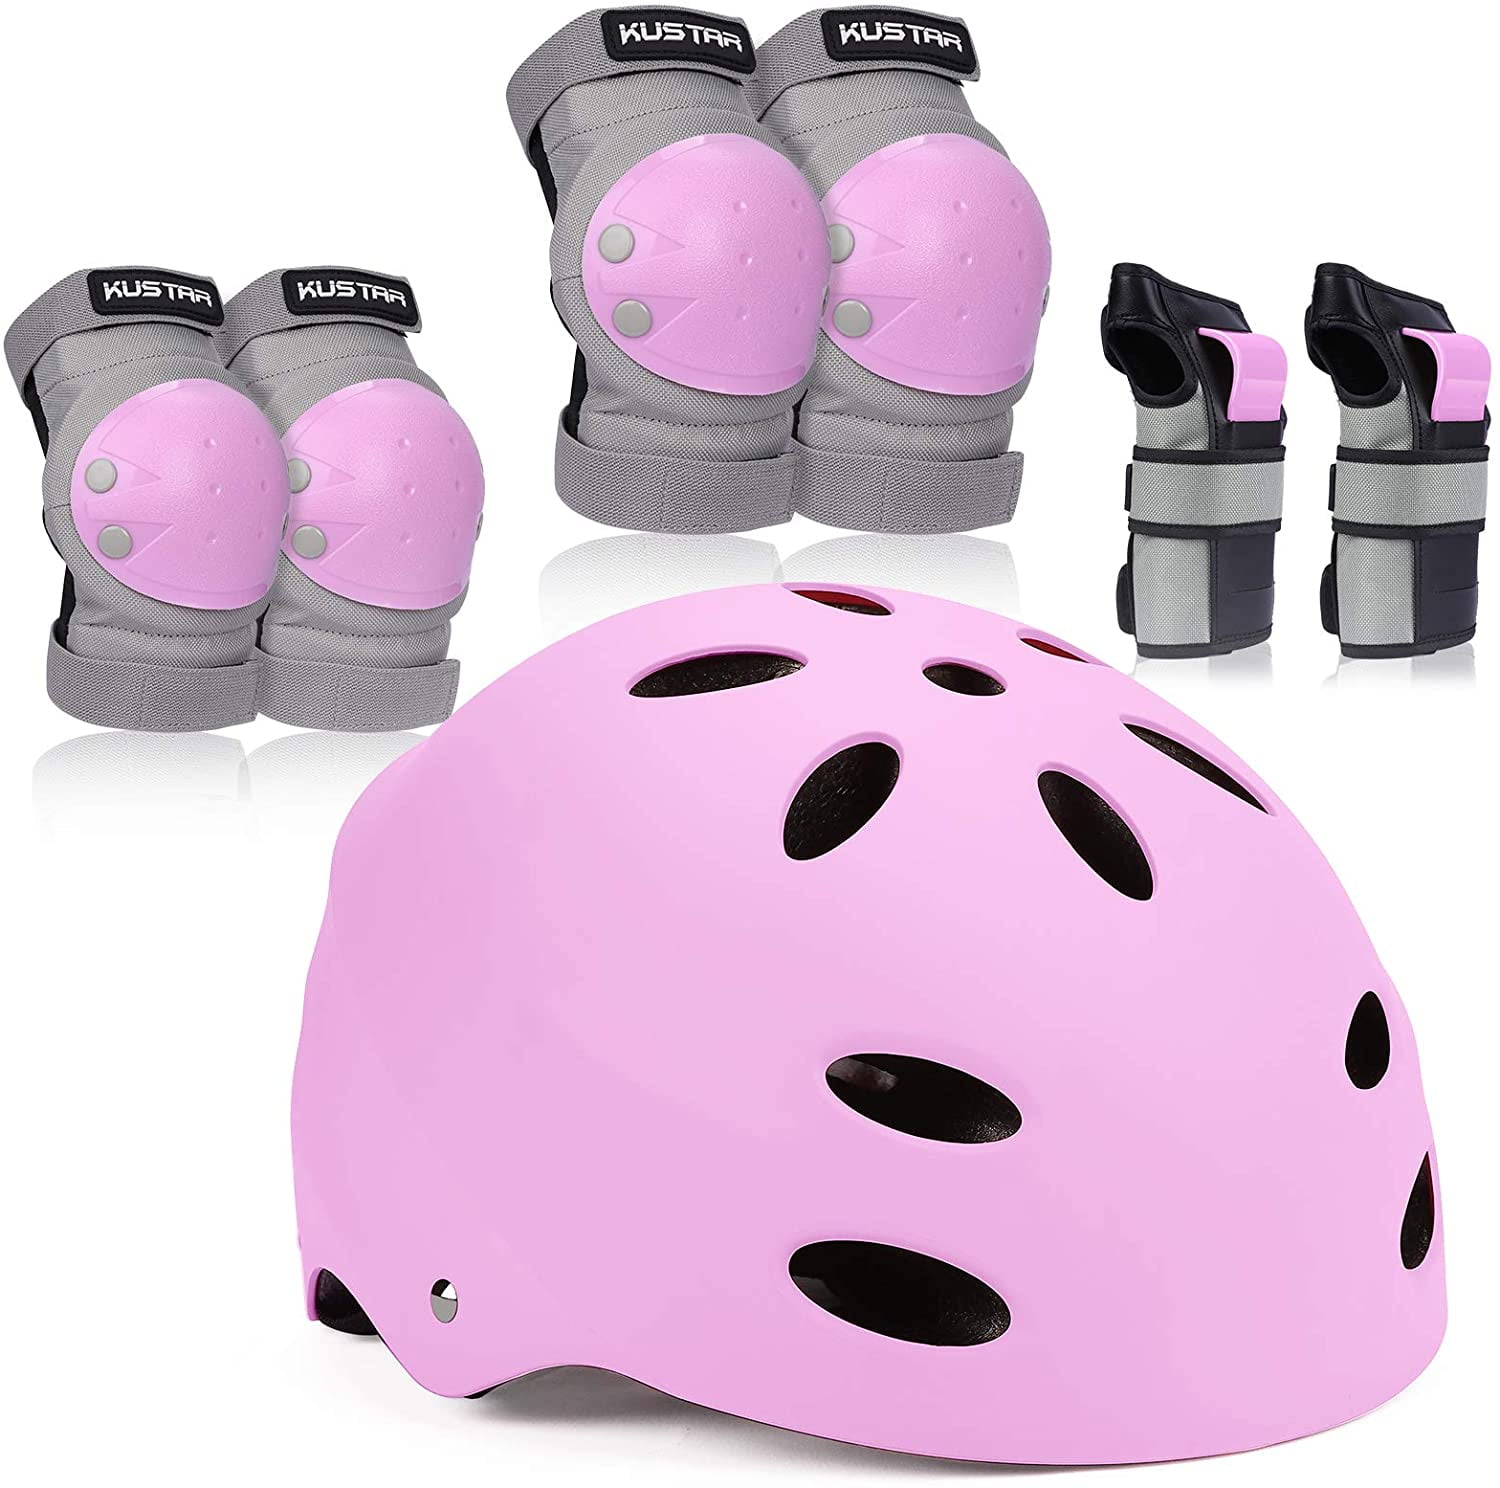 Kids Protective Gear Set Adjustable Helmet Knee Elbow Pads for Skating Biking 